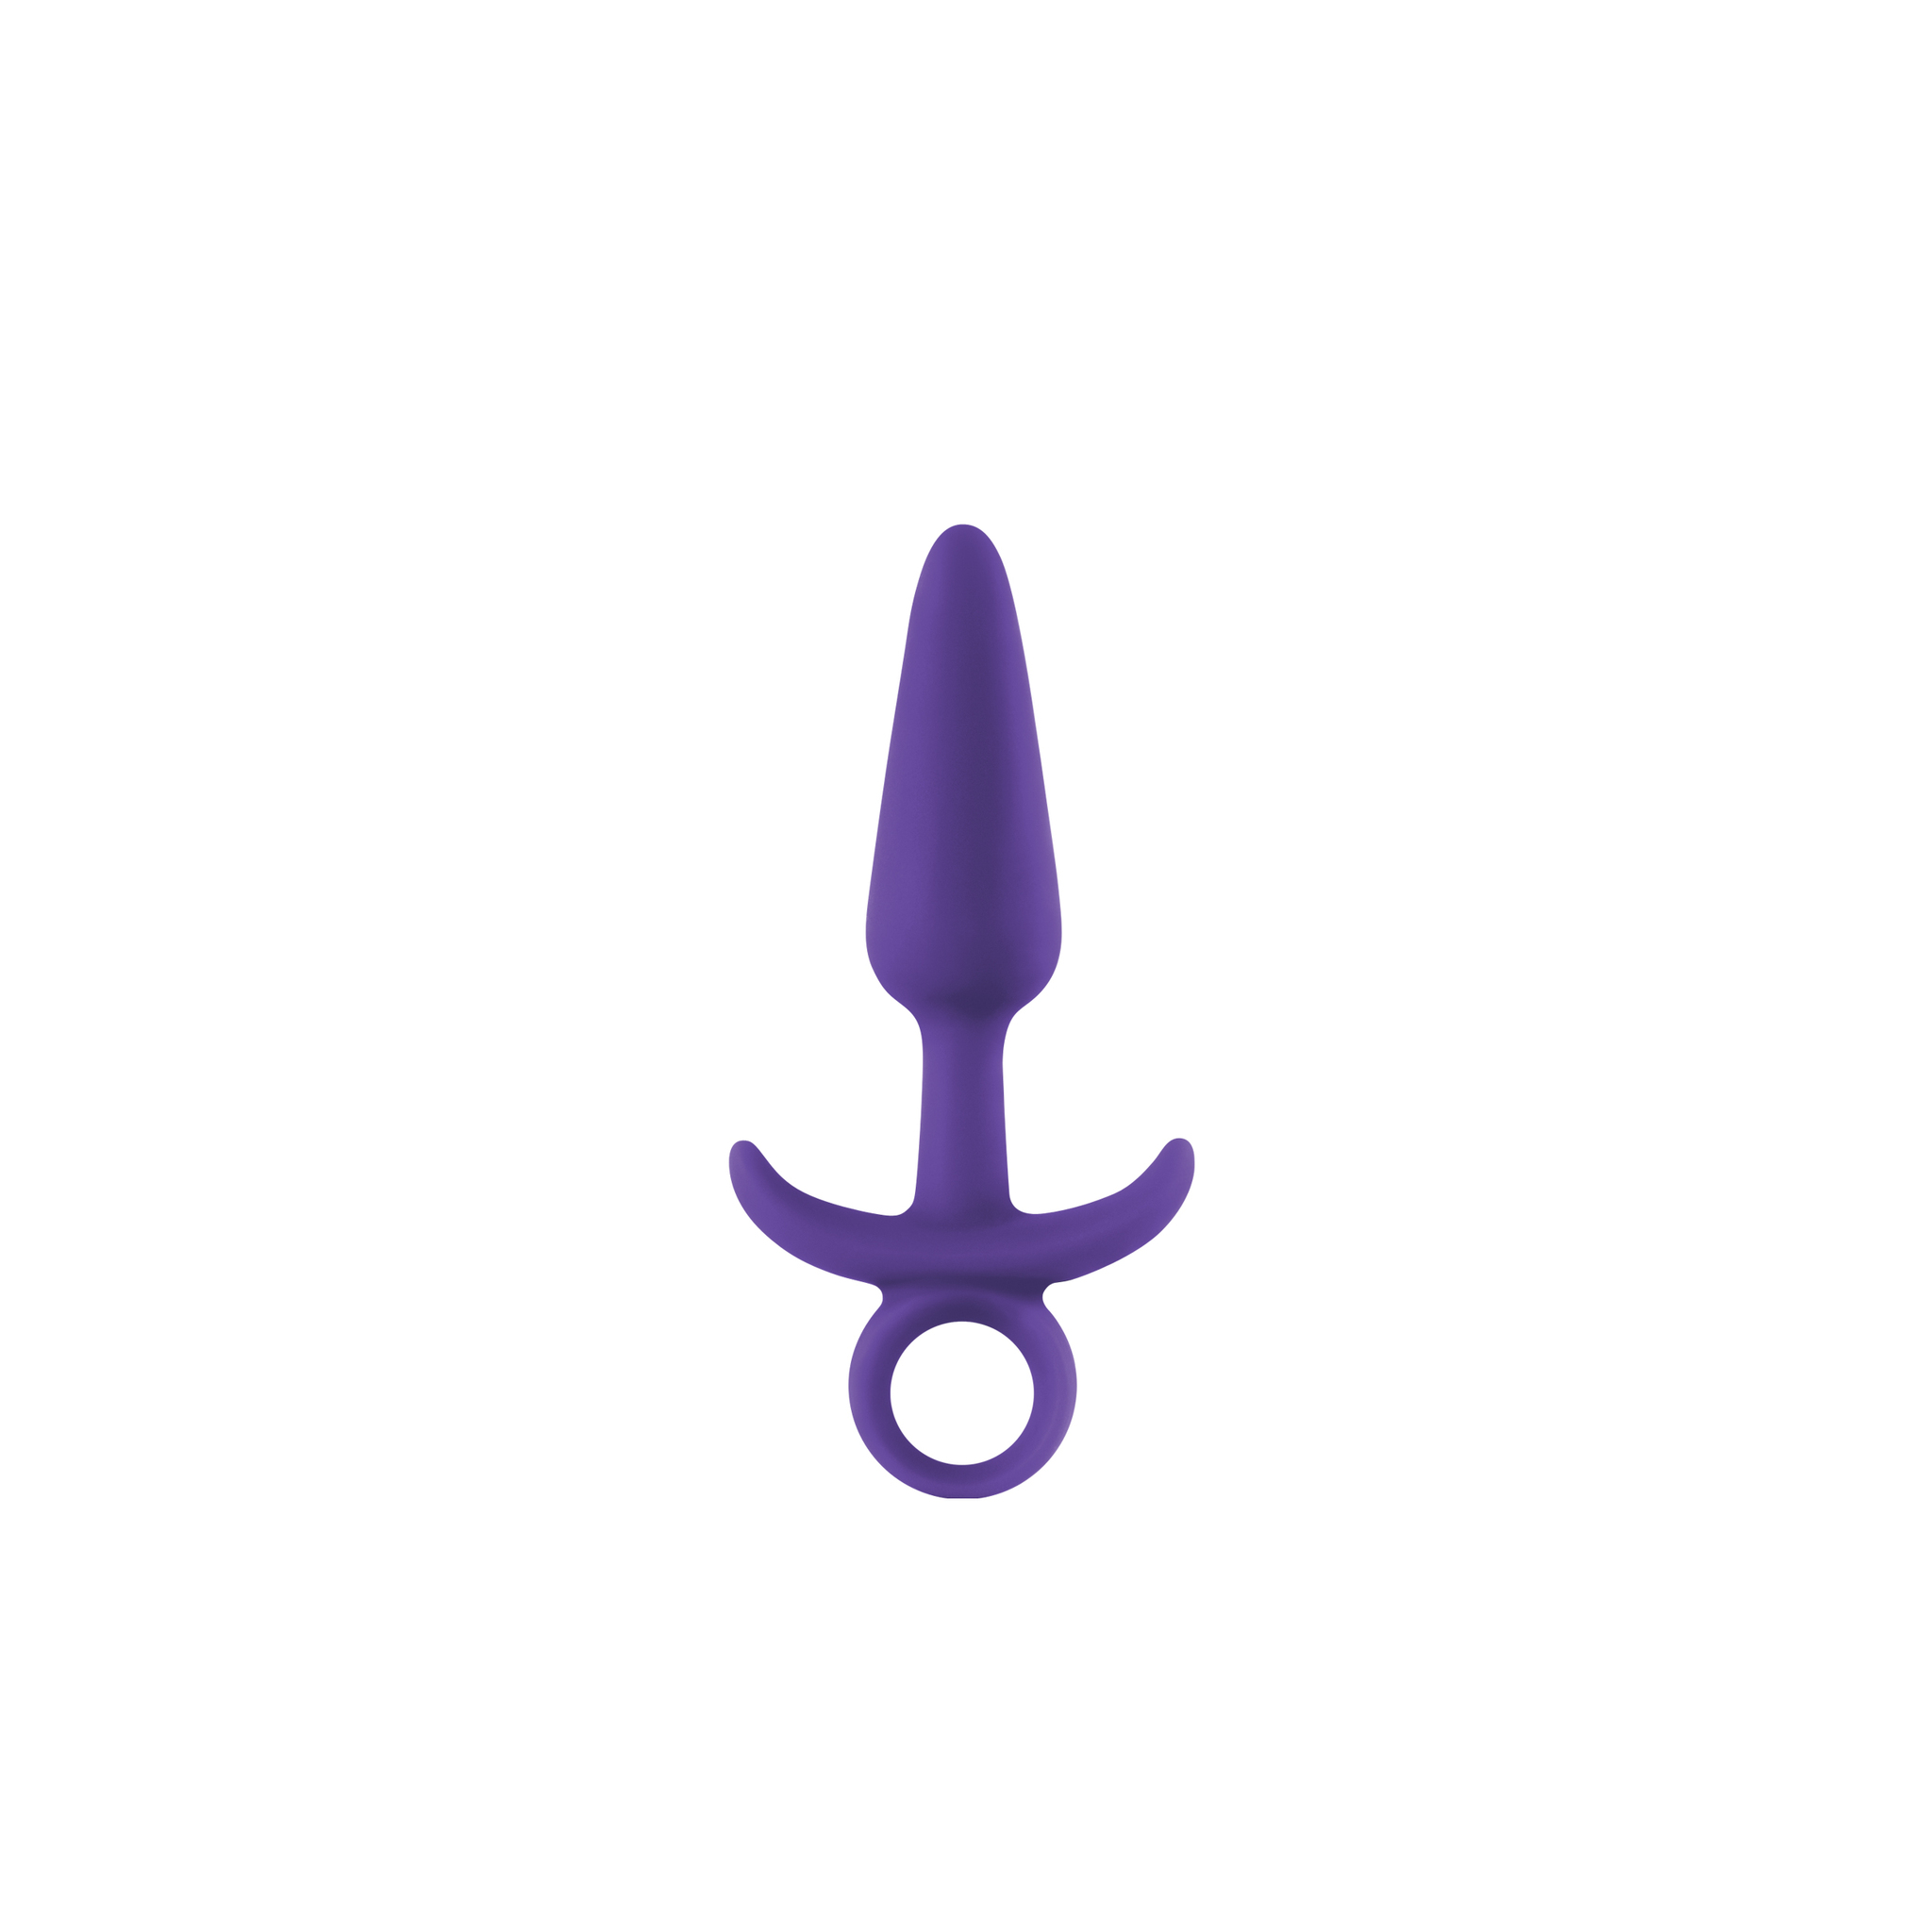 Inya - Prince, small purple